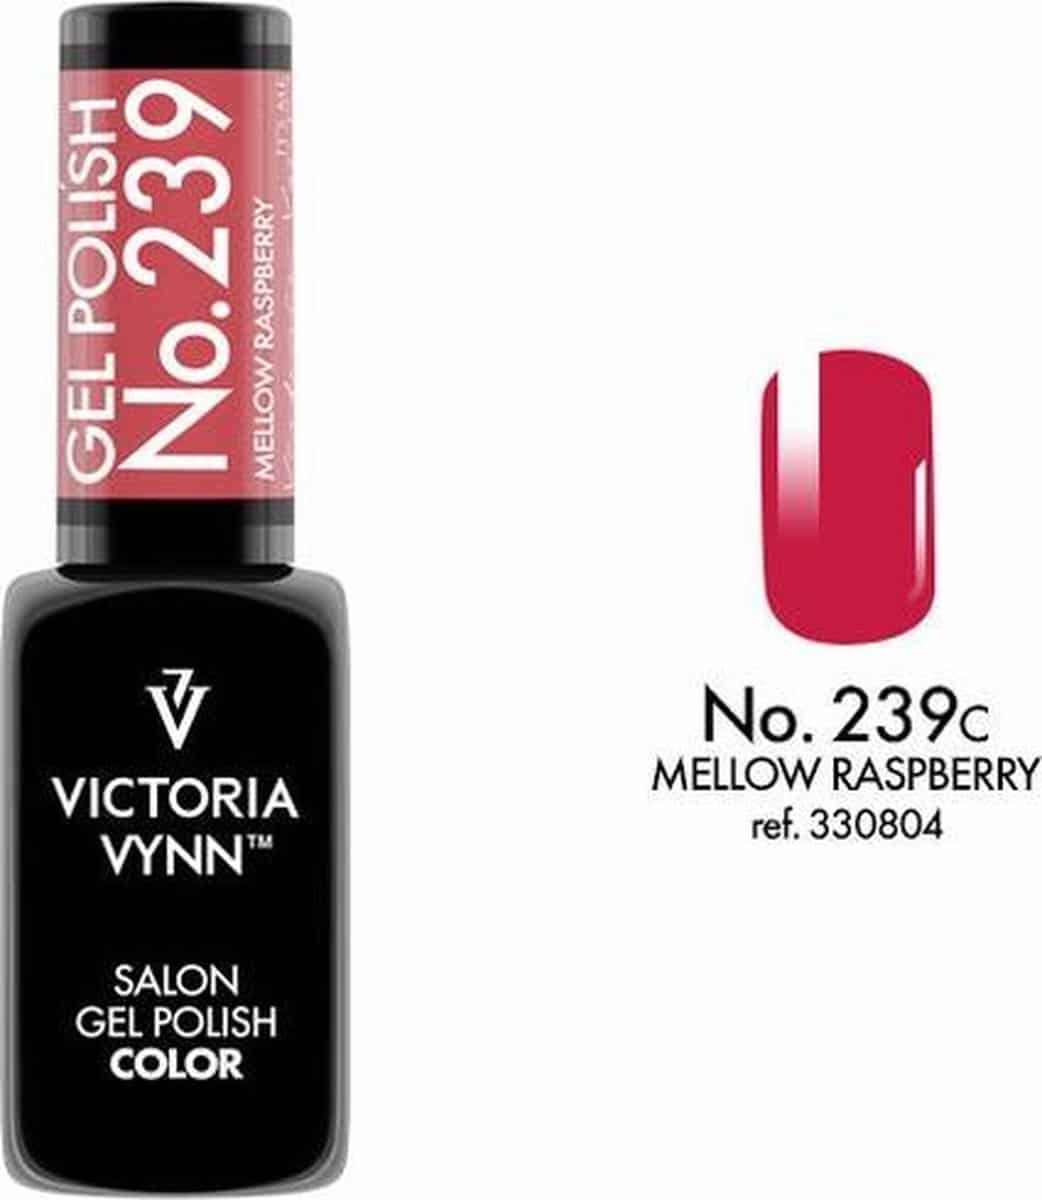 Victoria Vynn™ Gellak - Gel Nagellak - Salon Gel Polish Color - Mellow Raspberry 239 - 8 ml